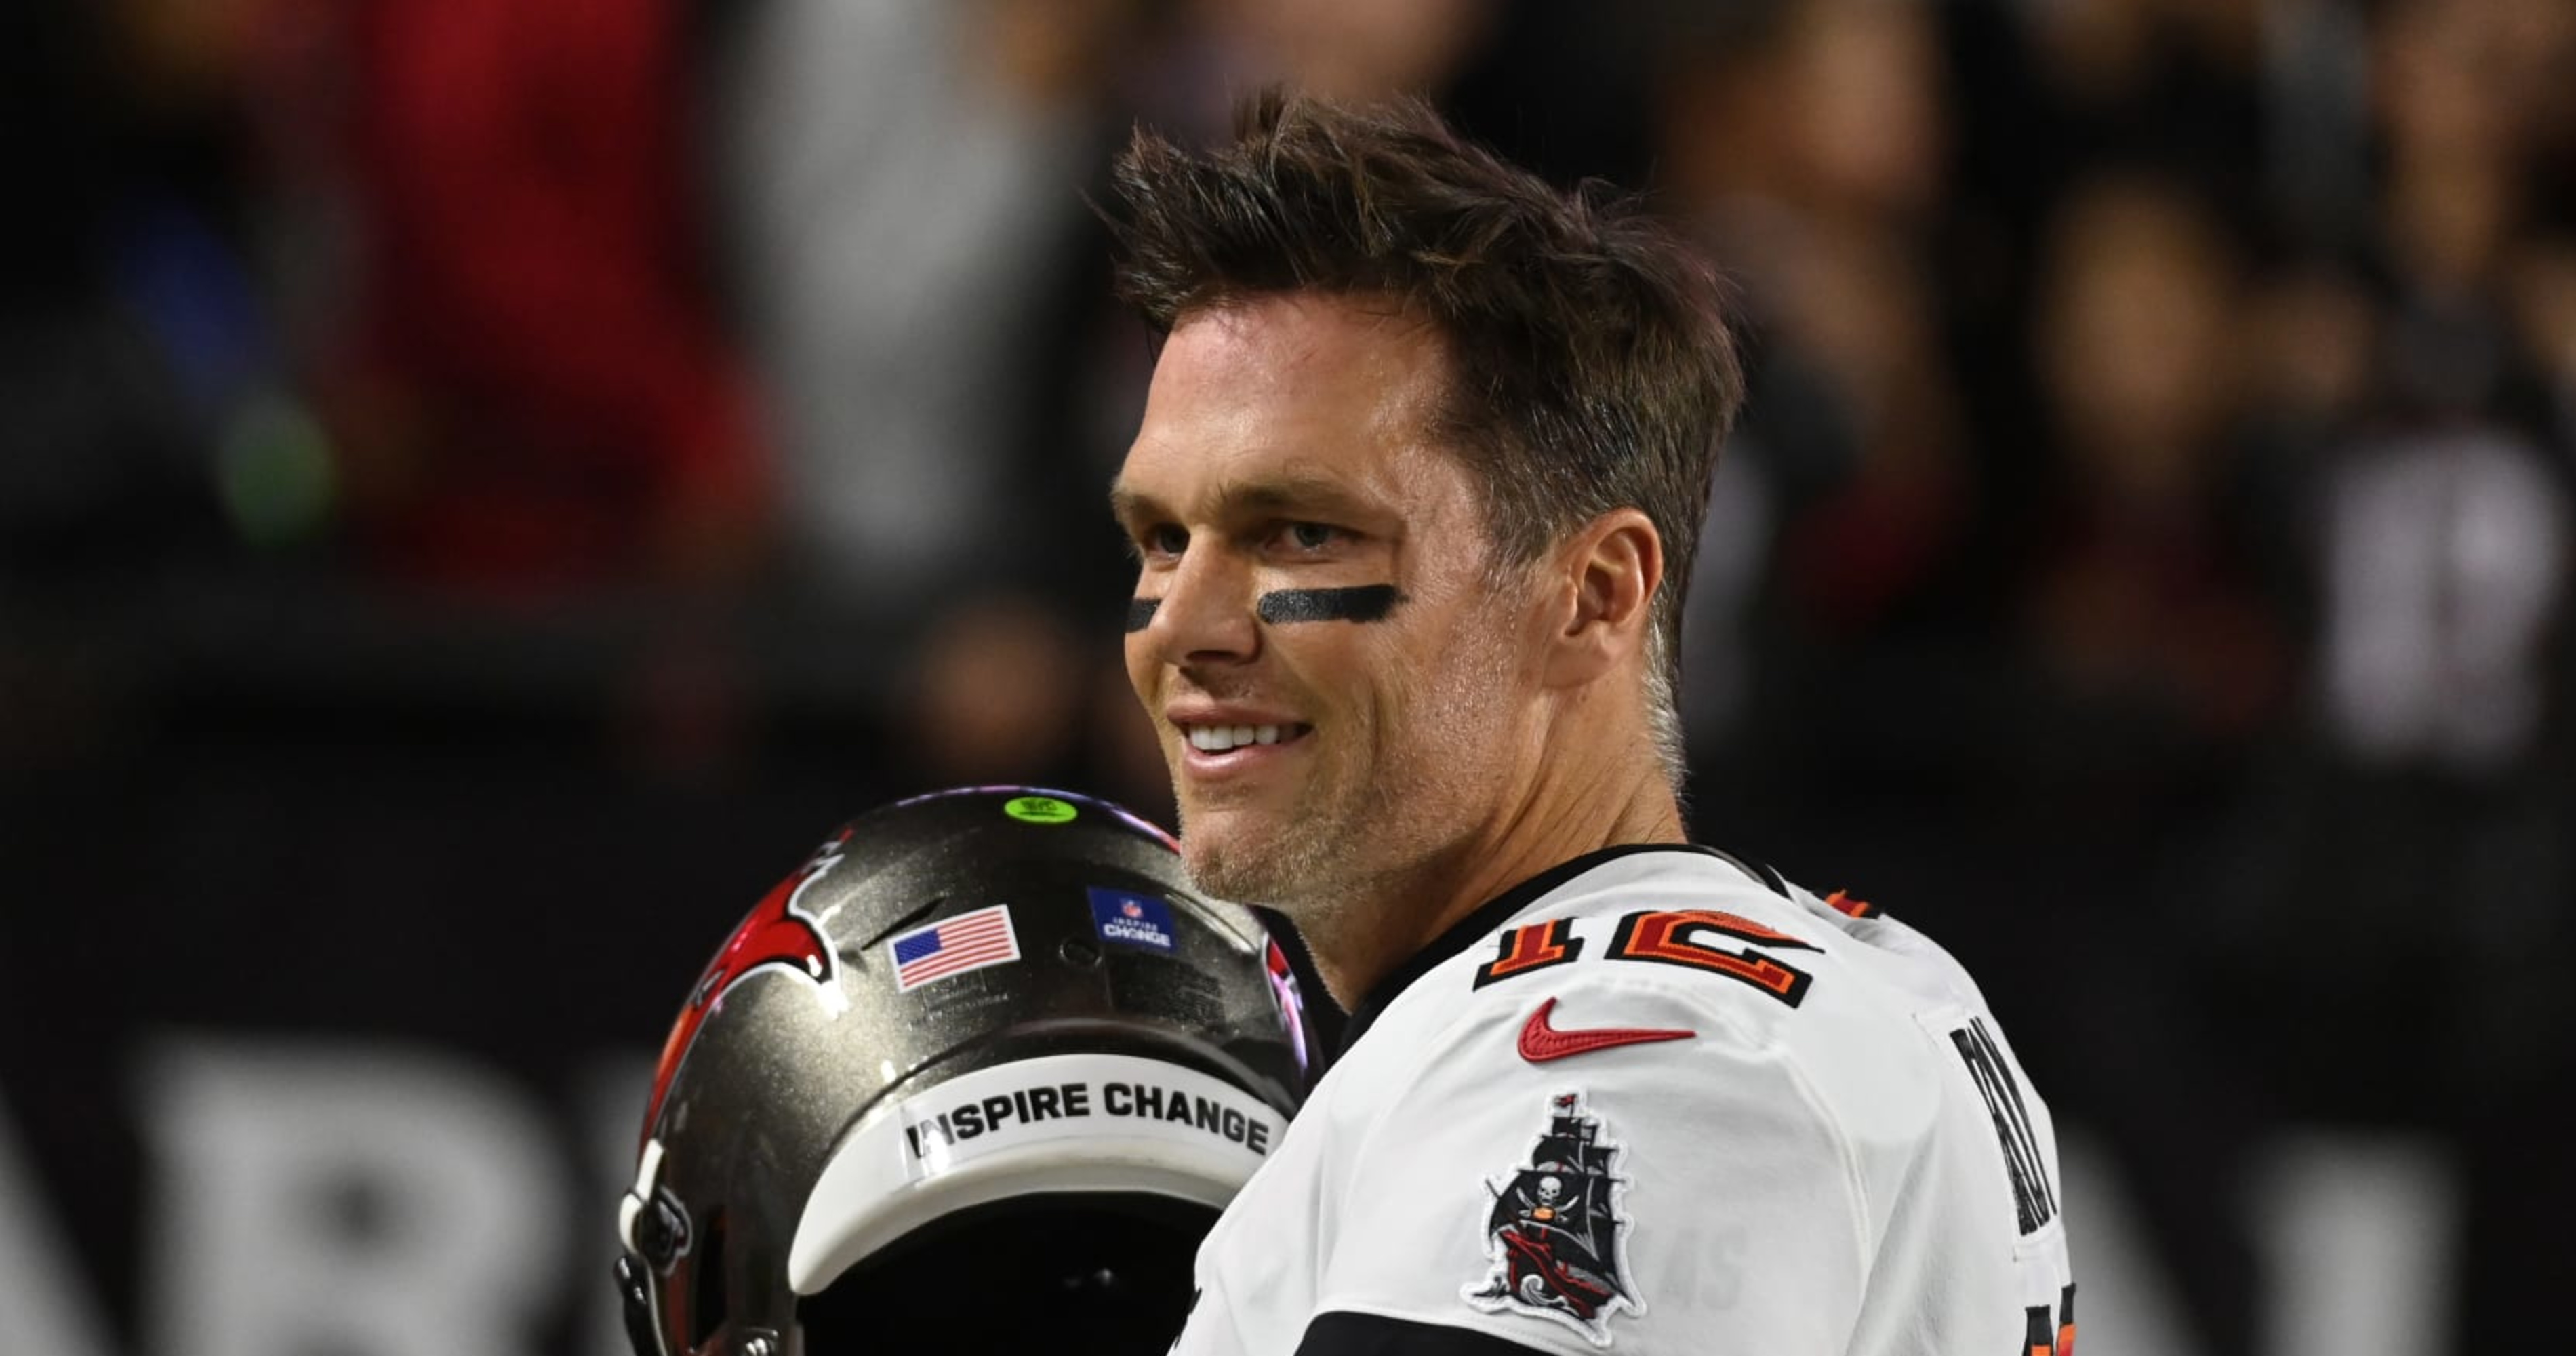 Greg Olsen will call Super Bowl 2023 for Fox as Tom Brady waits